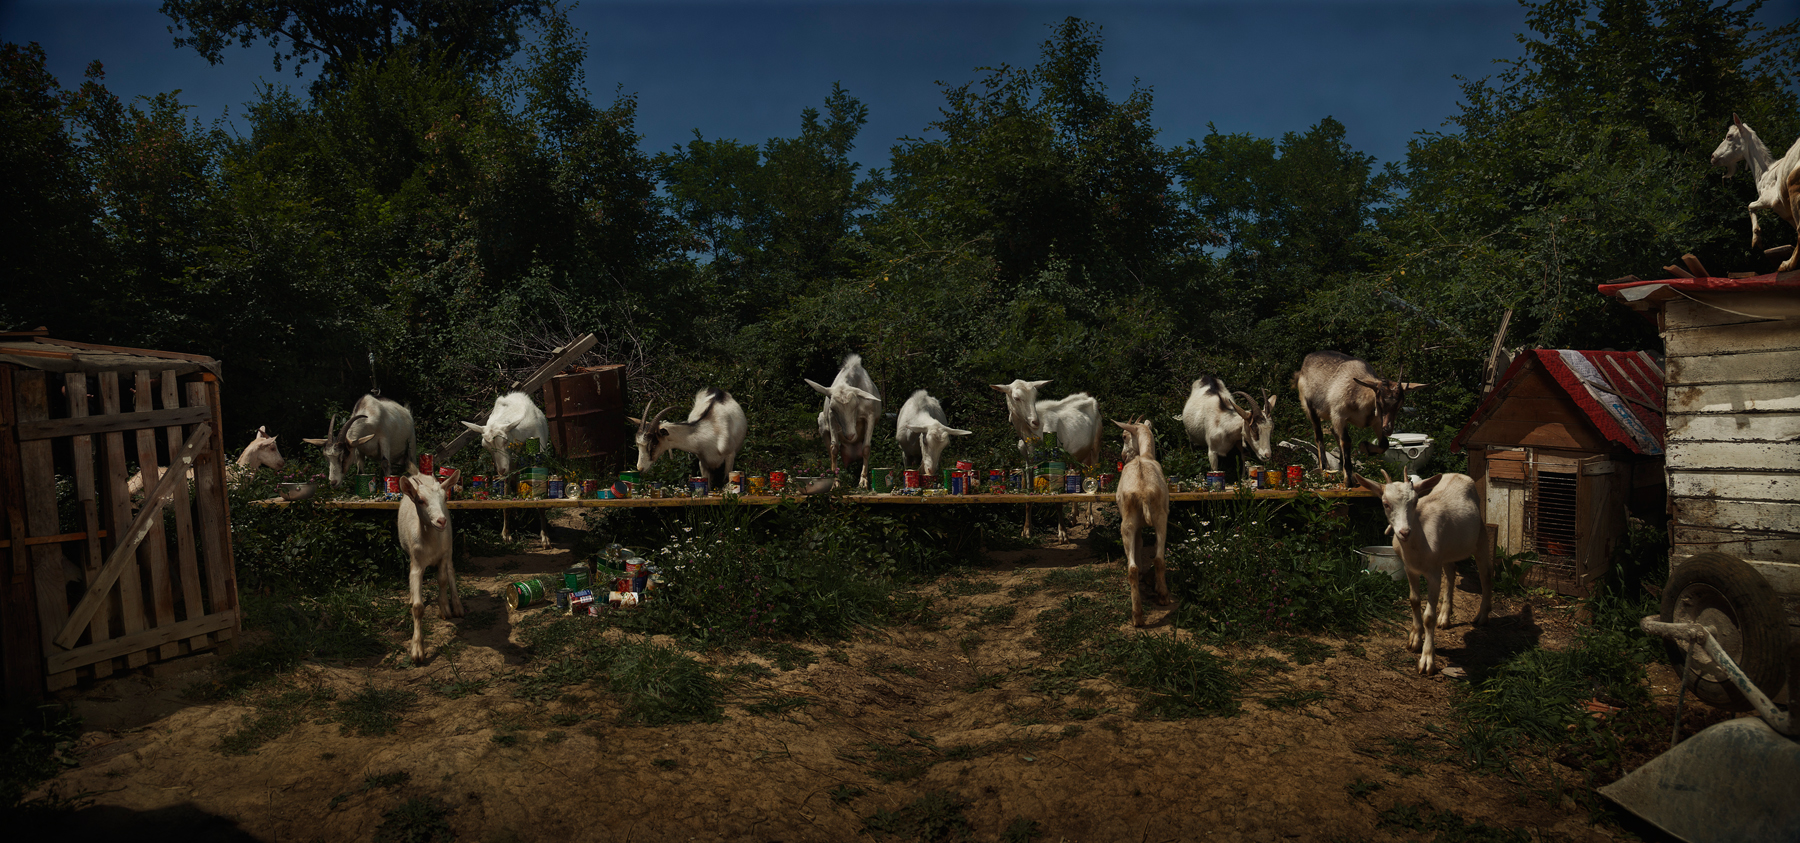  The Goat Feast  Bosnia, 2013  10”x21” | 20”x42” | 40”x84” 